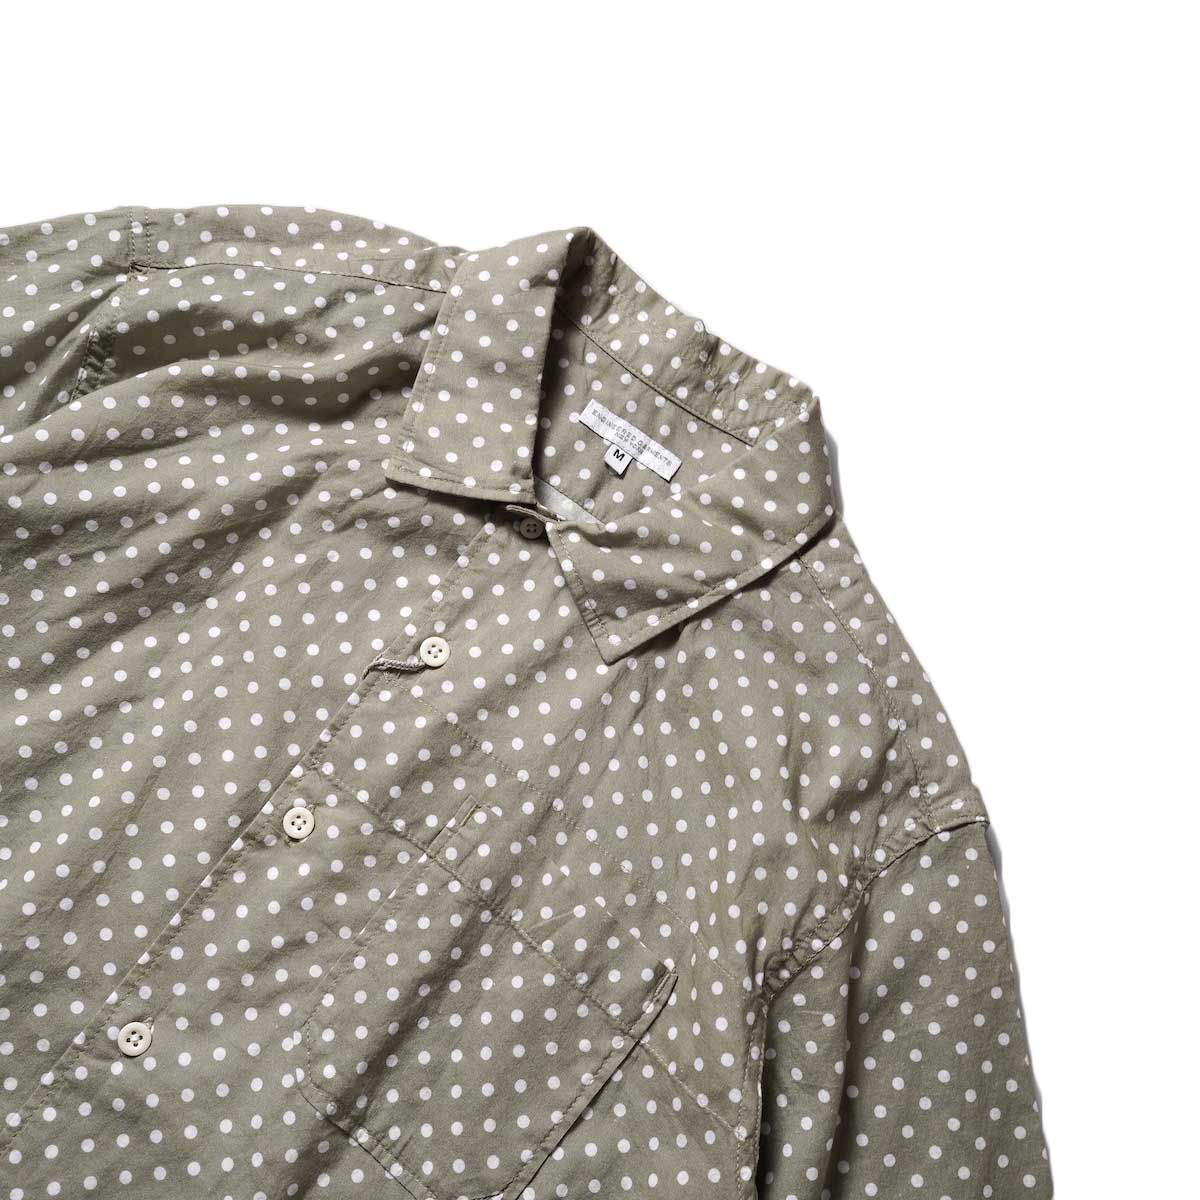 Engineered Garments / Camp Shirt - Polka Dot Cotton Lawn (Tan)襟